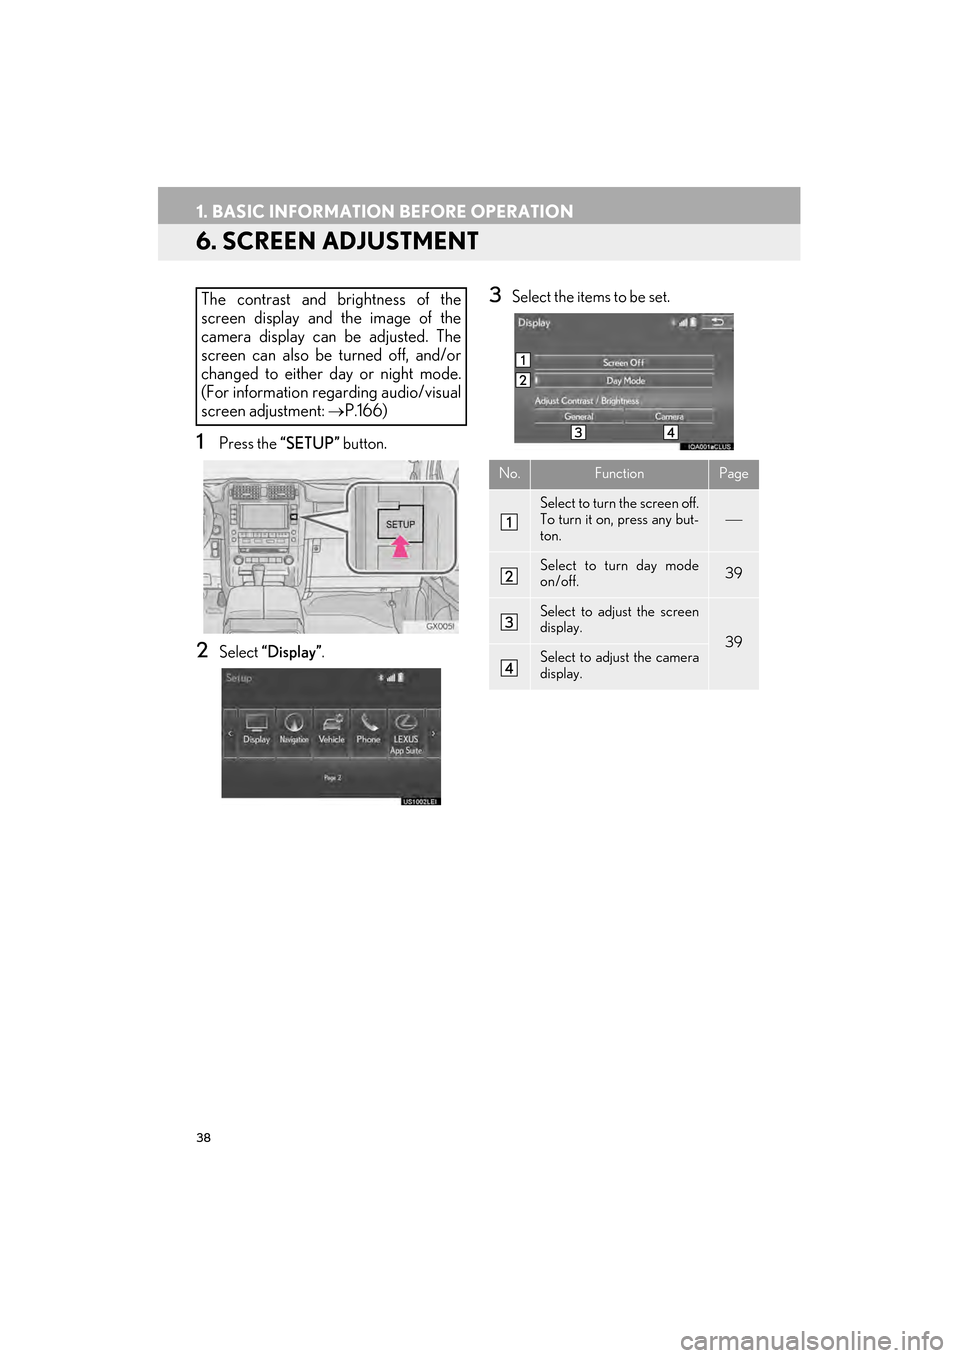 Lexus GX460 2015  Navigation Manual 38
1. BASIC INFORMATION BEFORE OPERATION
GX460_Navi_OM60L77U_(U)14.06.02     10:48
6. SCREEN ADJUSTMENT
1Press the “SETUP” button.
2Select “Display” .
3Select the items to be set.The contrast 